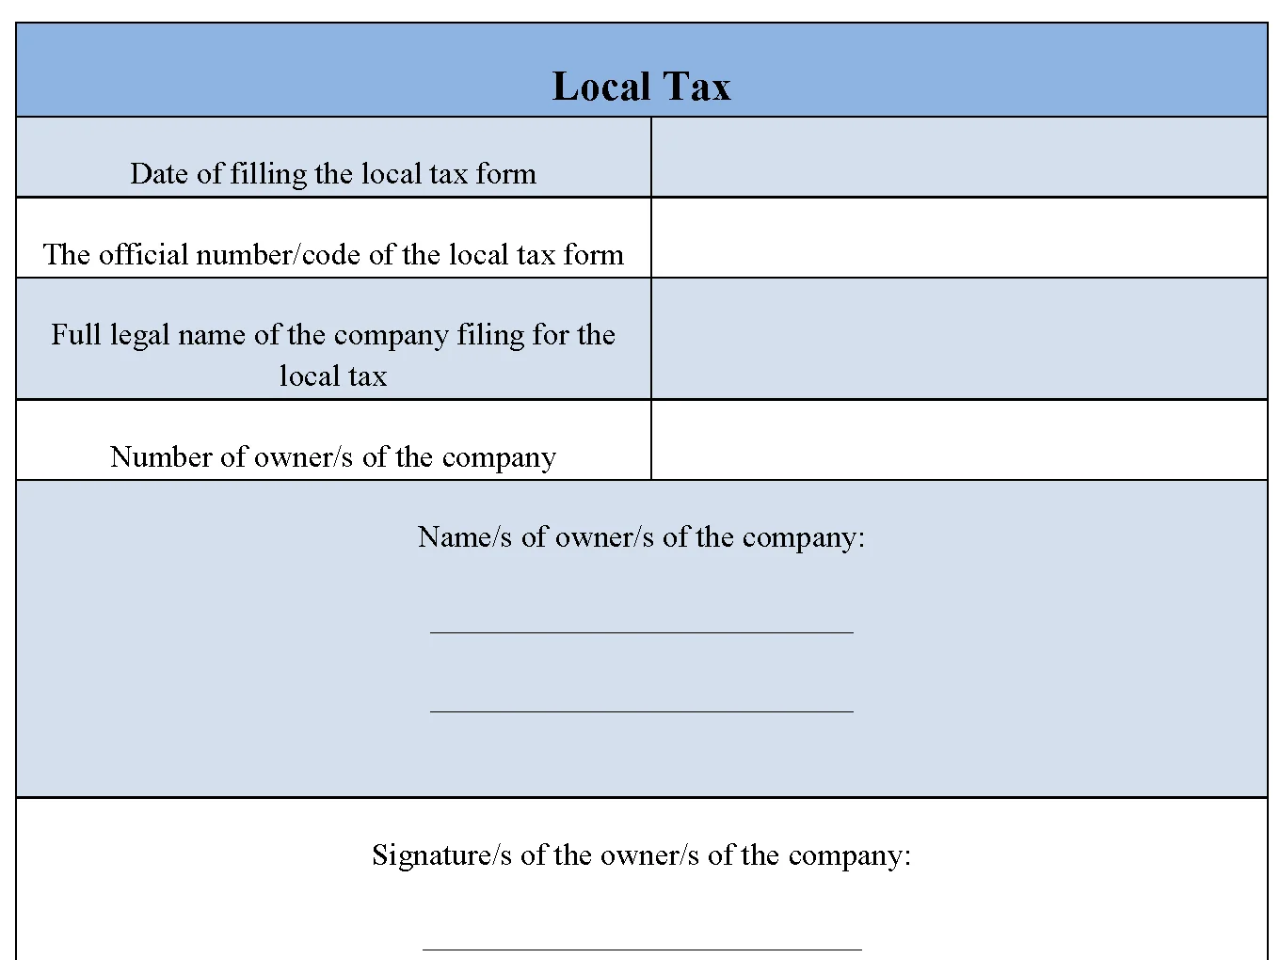 Local Tax Form